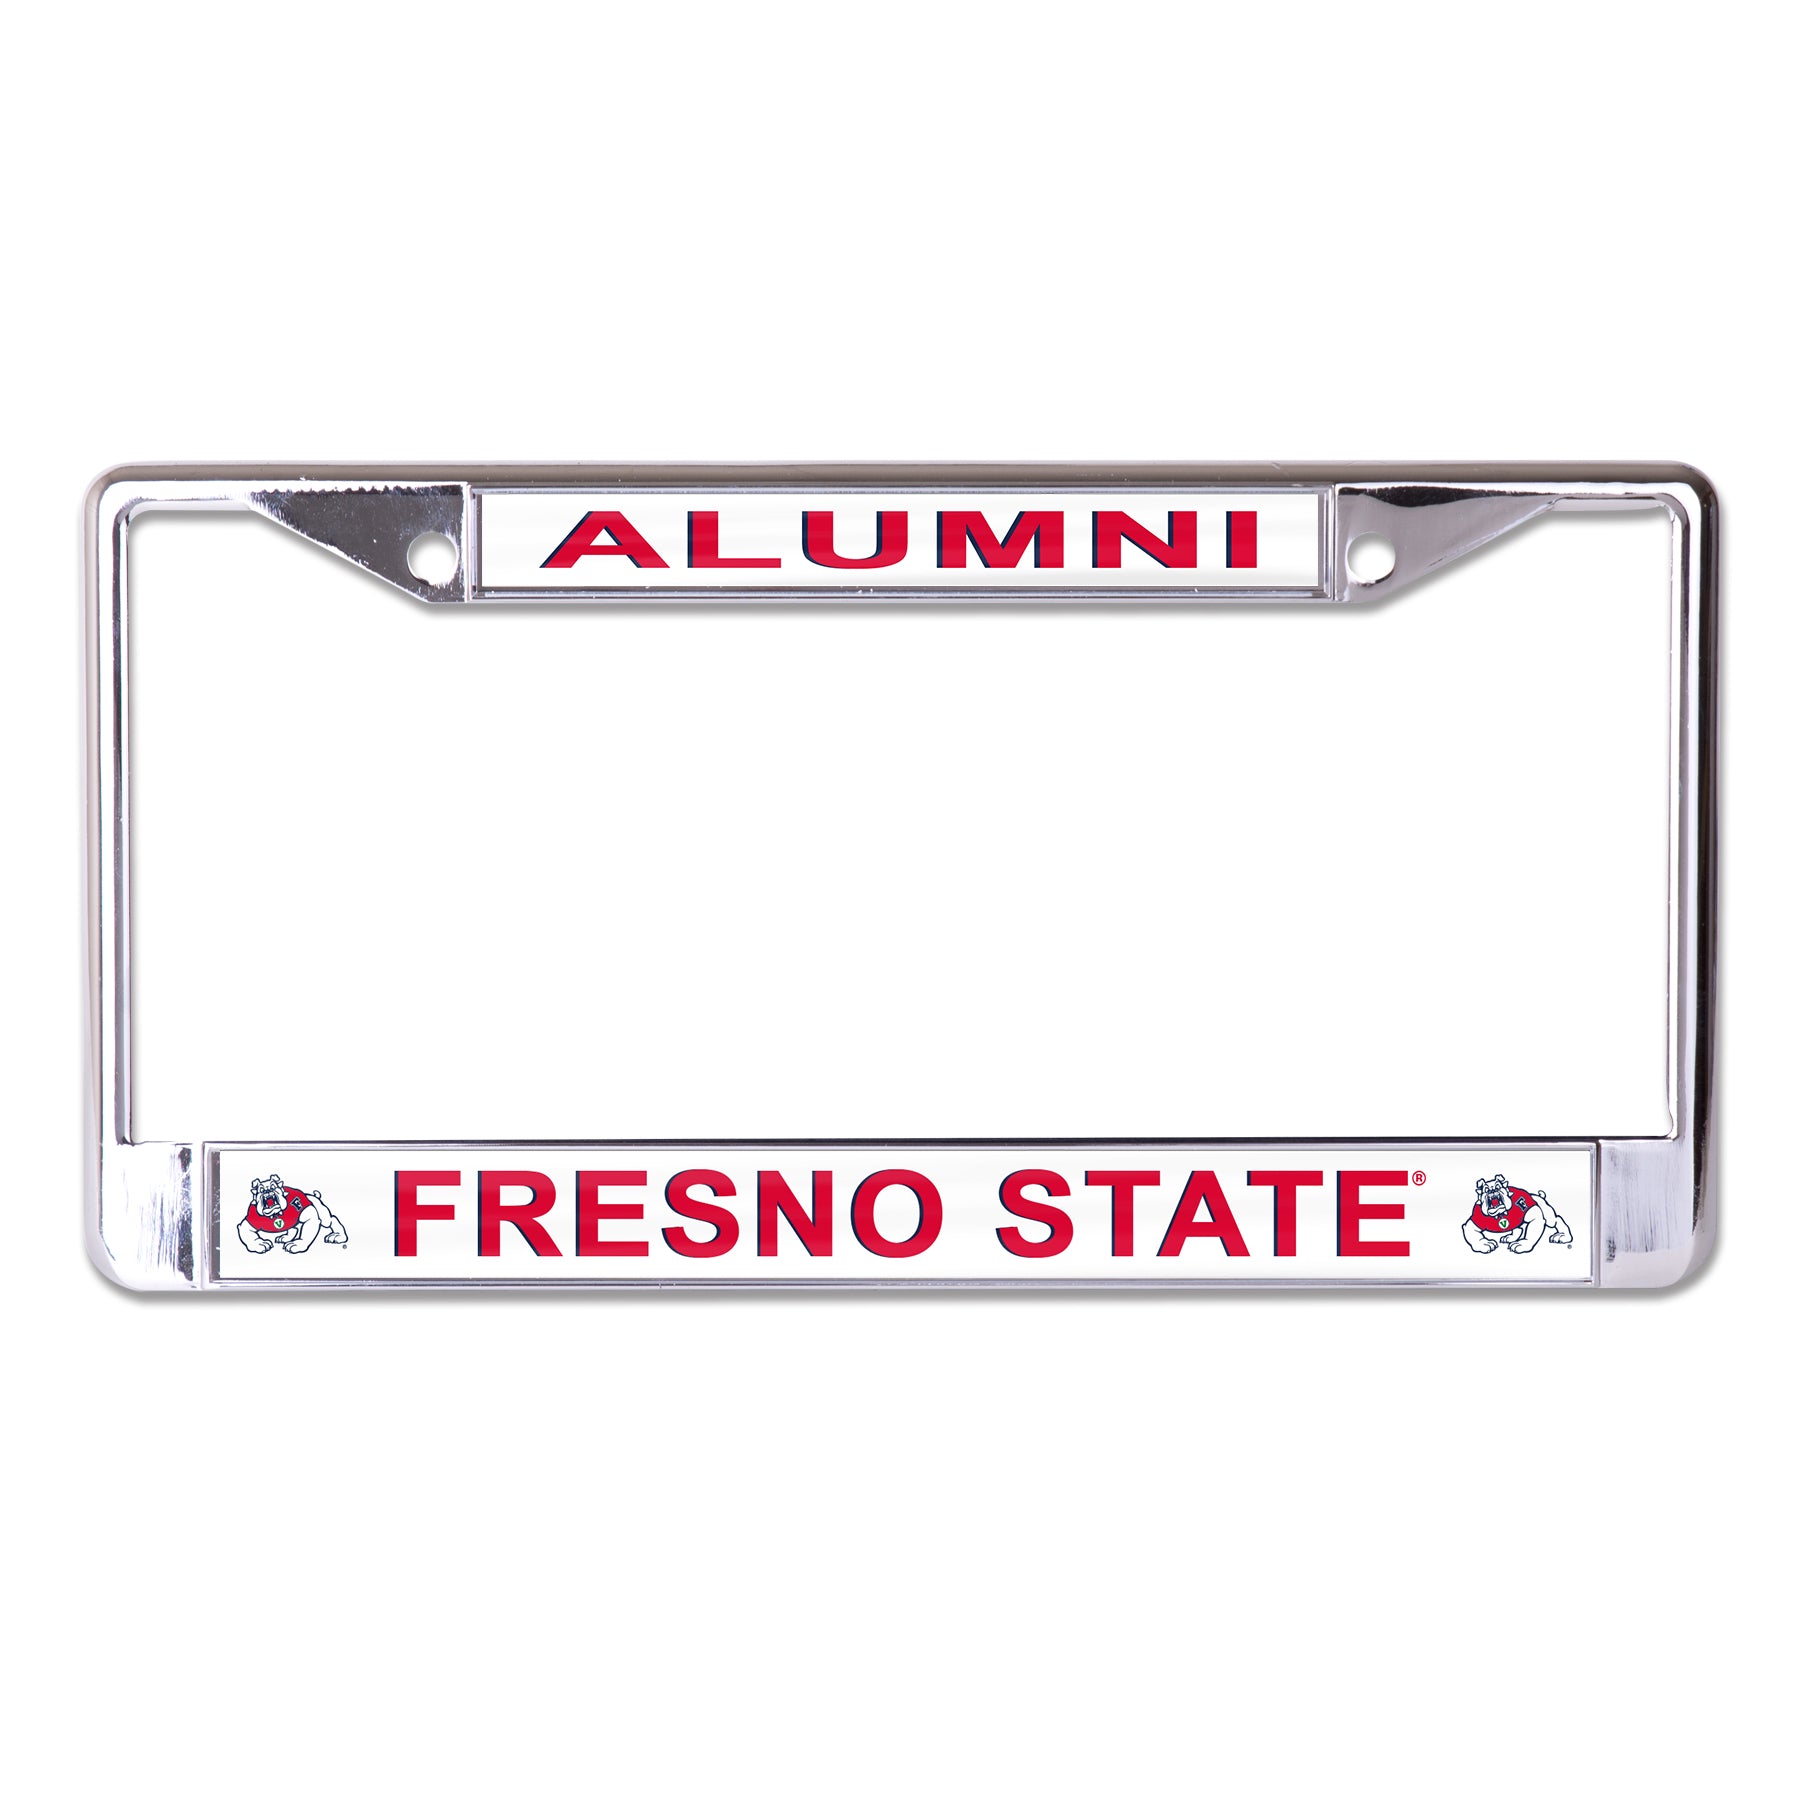 Fresno State University Alumni Chrome License Plate Frame